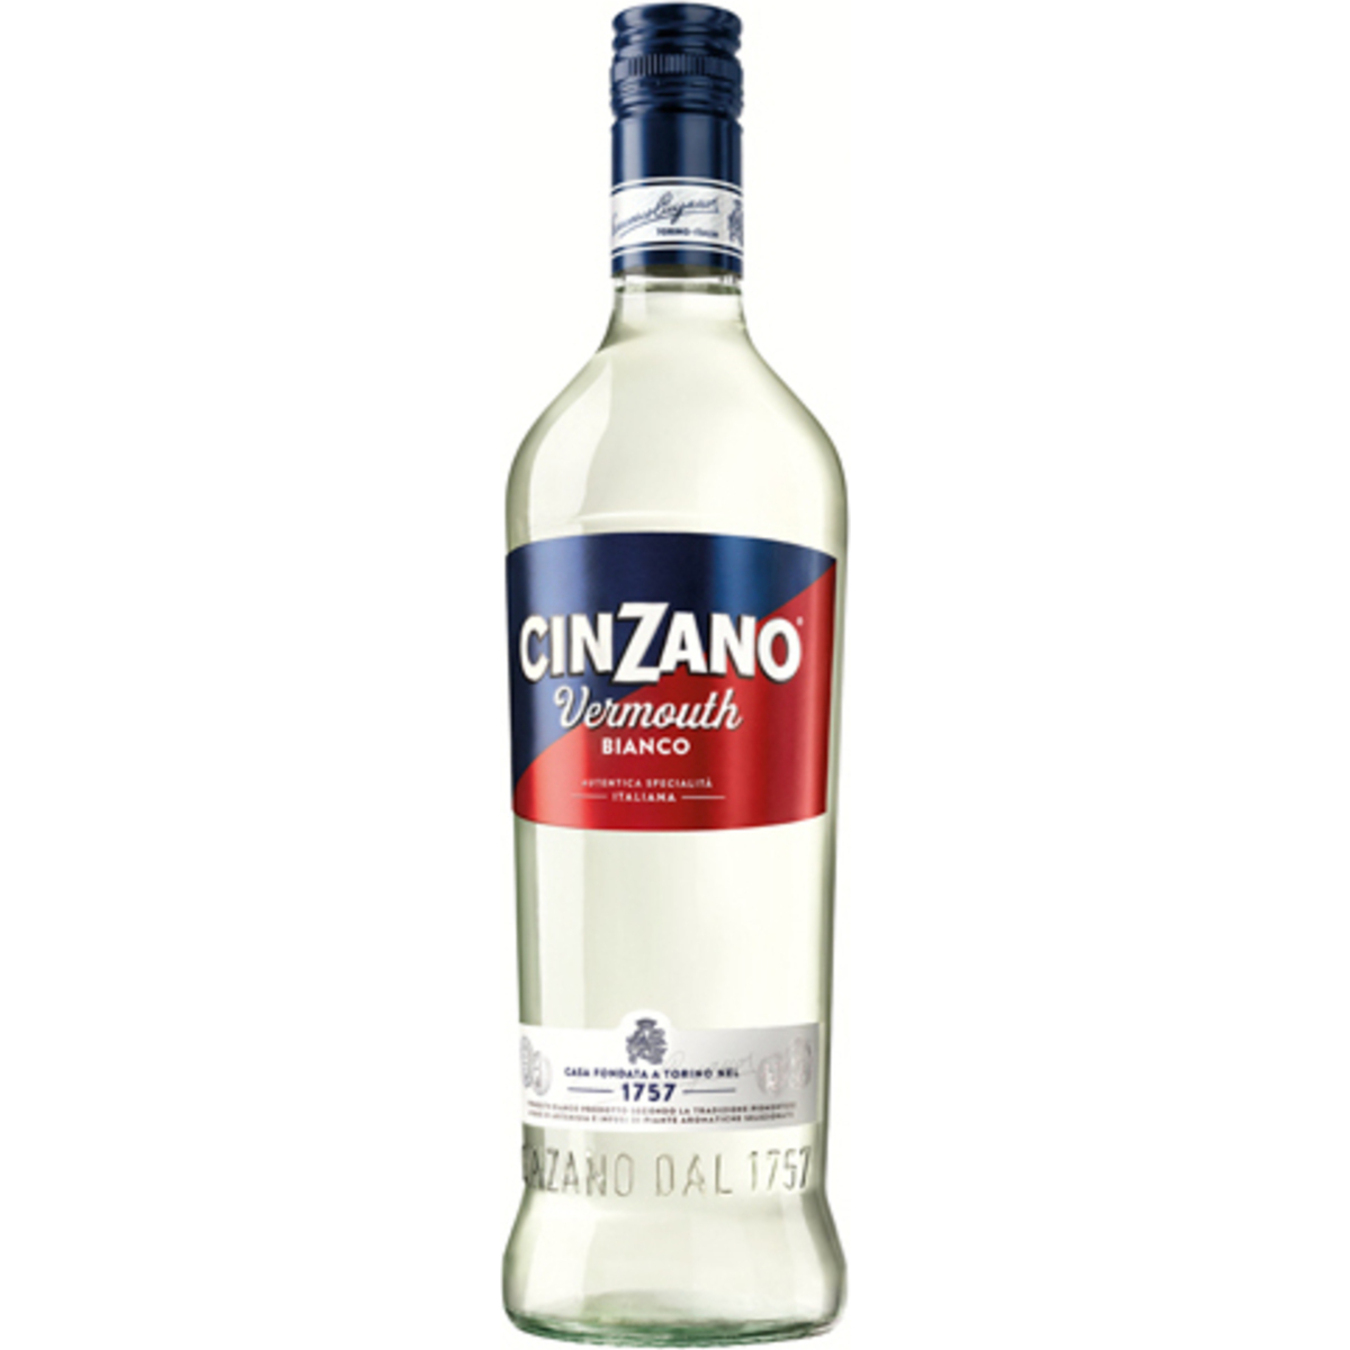 Vermouth Cinzano Bianko white 0.75 l